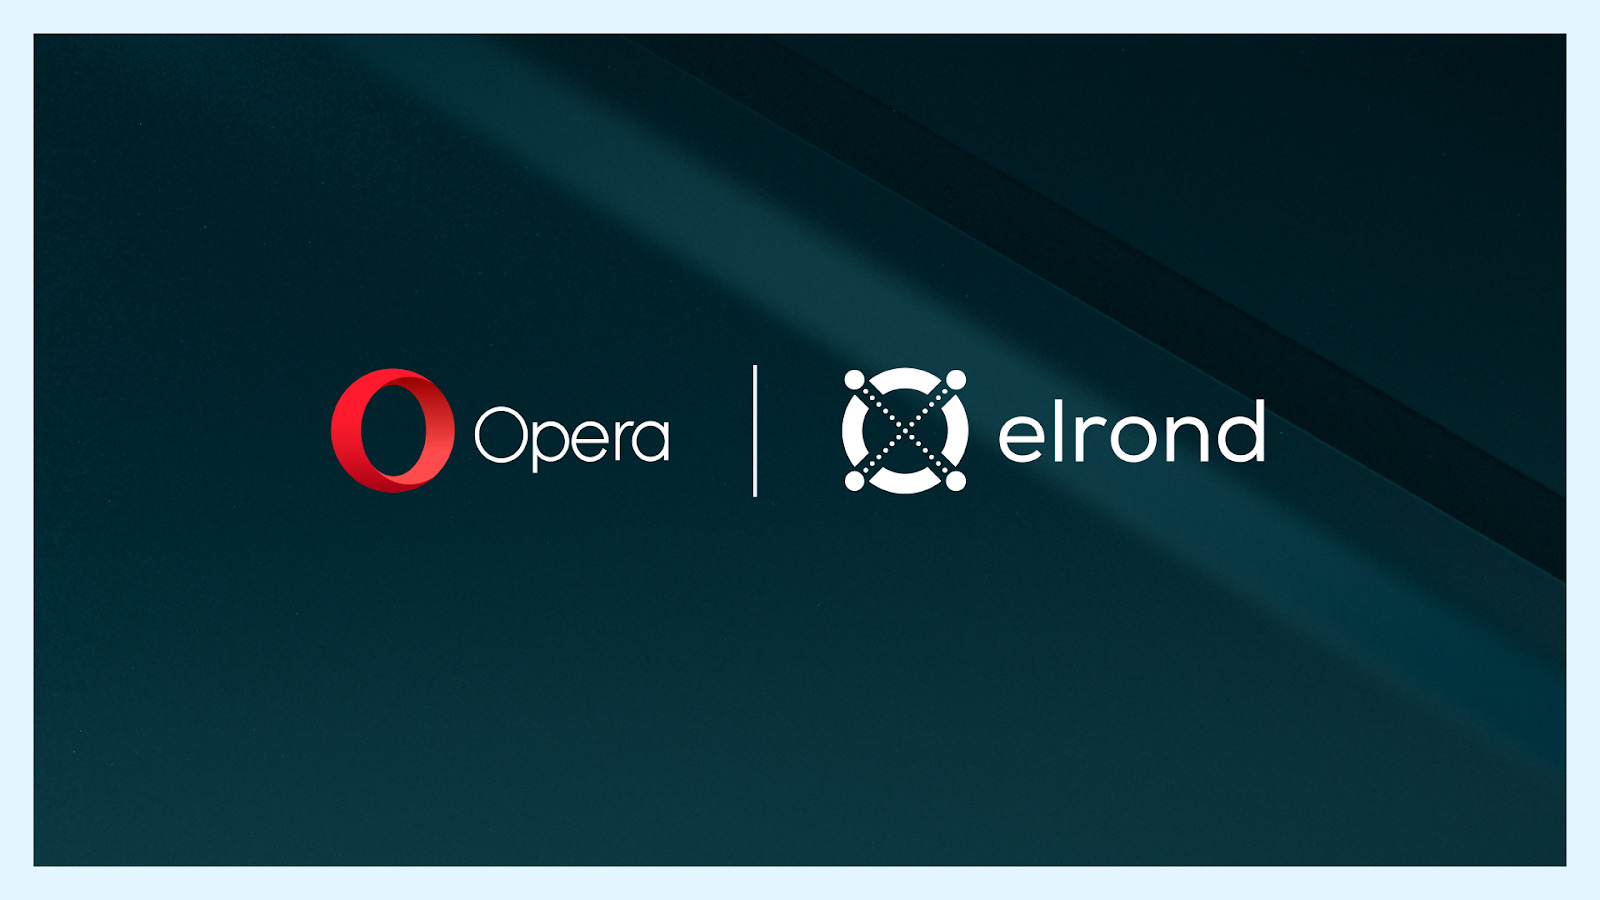 Opera Elrond logos